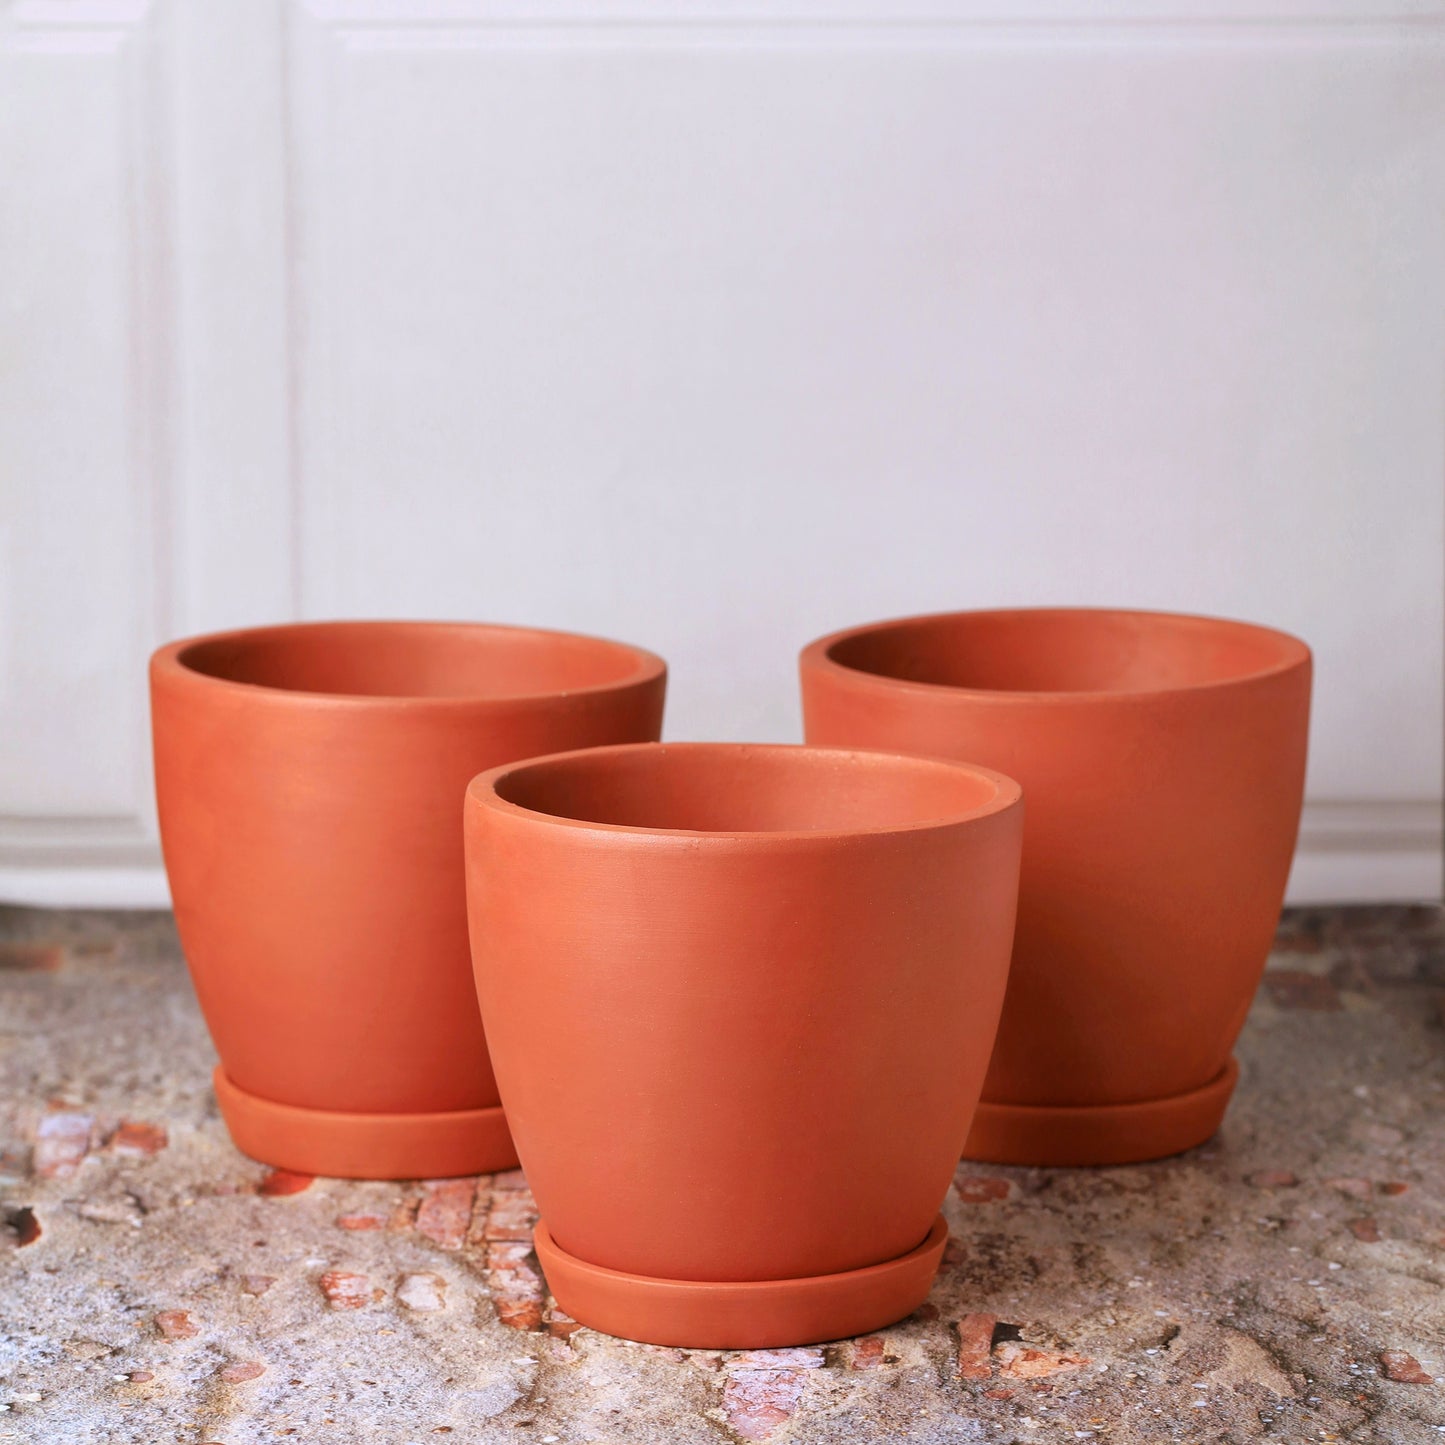 Kullad Terracotta Planters (Set of 4)